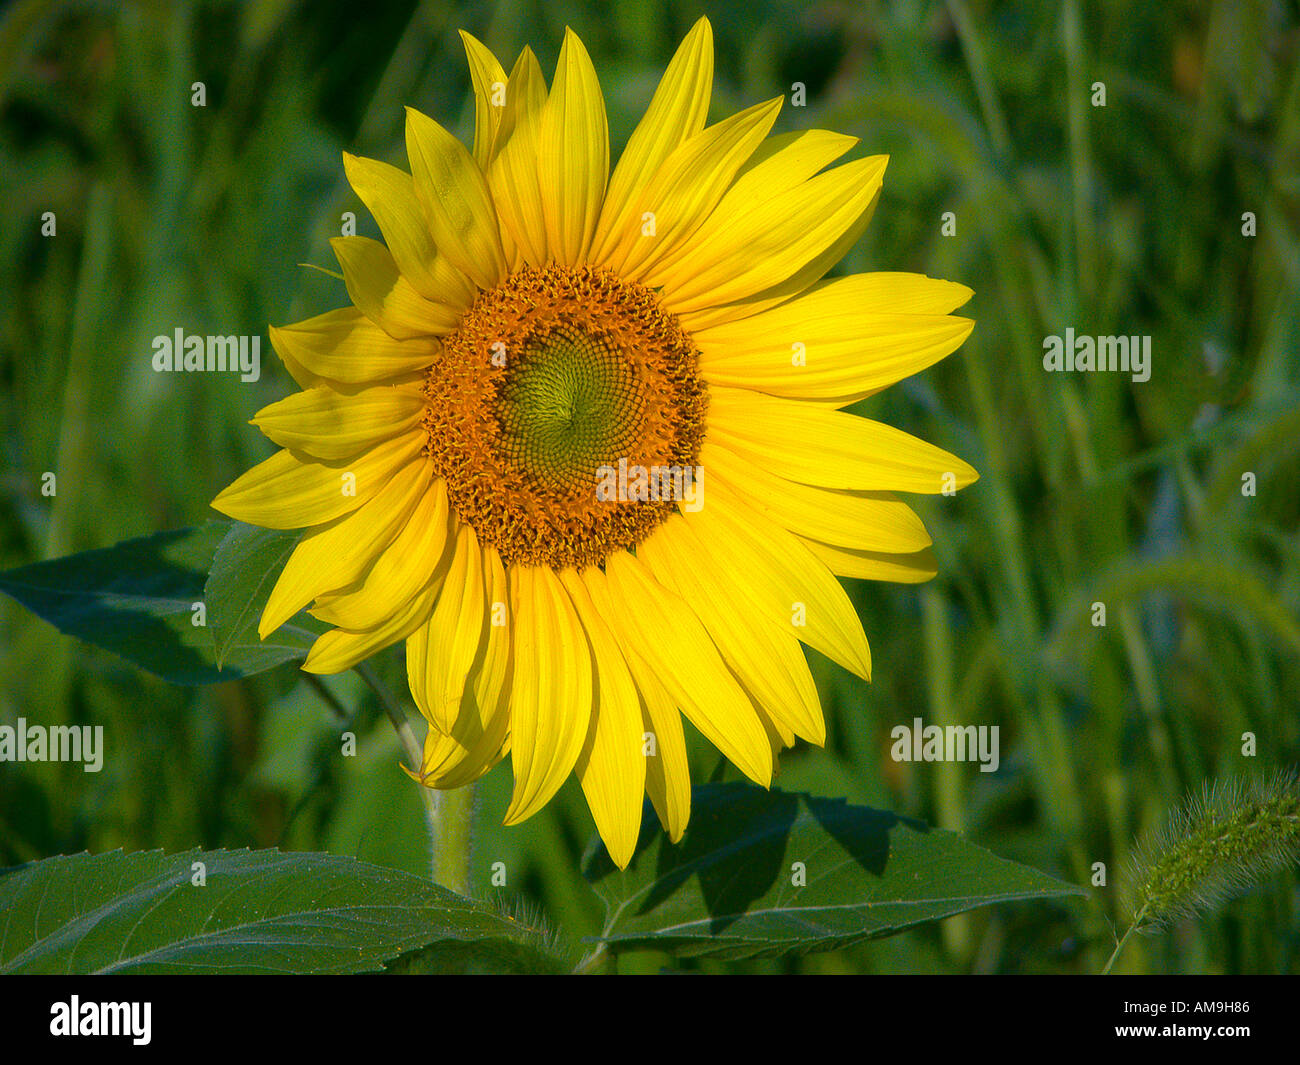 Common sunflower helianthus anuus bloom Stock Photo